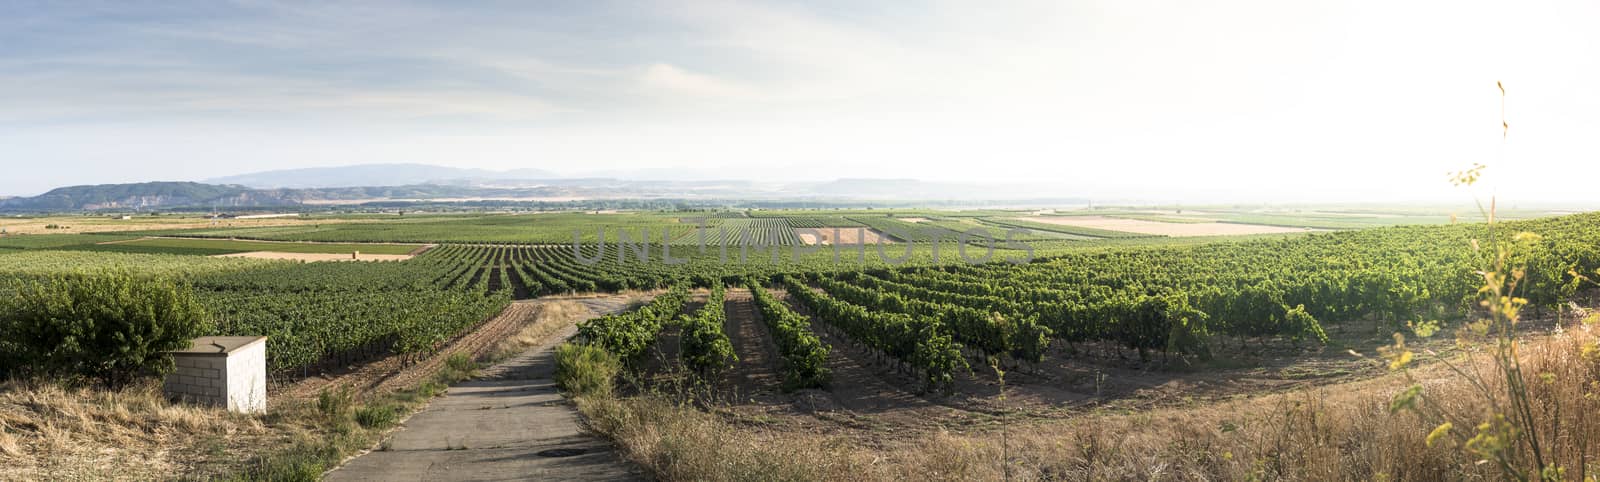 Vineyards on the hill by deyan_georgiev